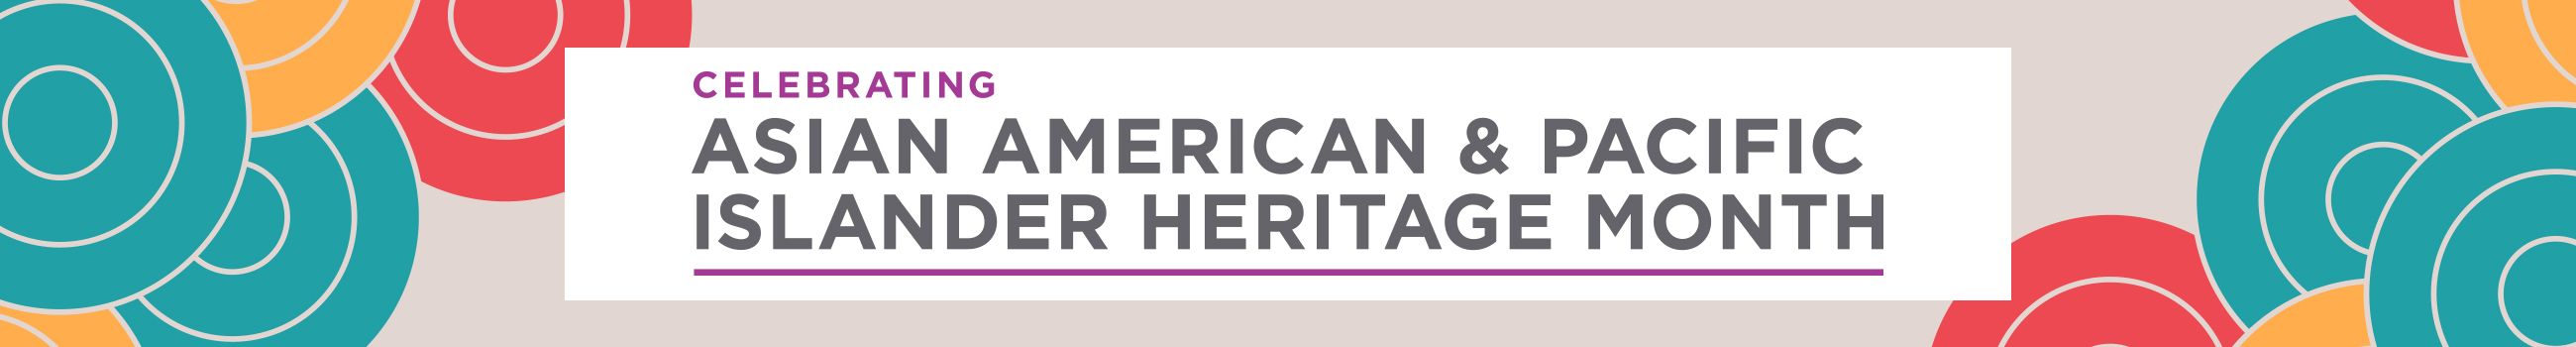 Celebrating Asian American & Pacific Islander Heritage Month 